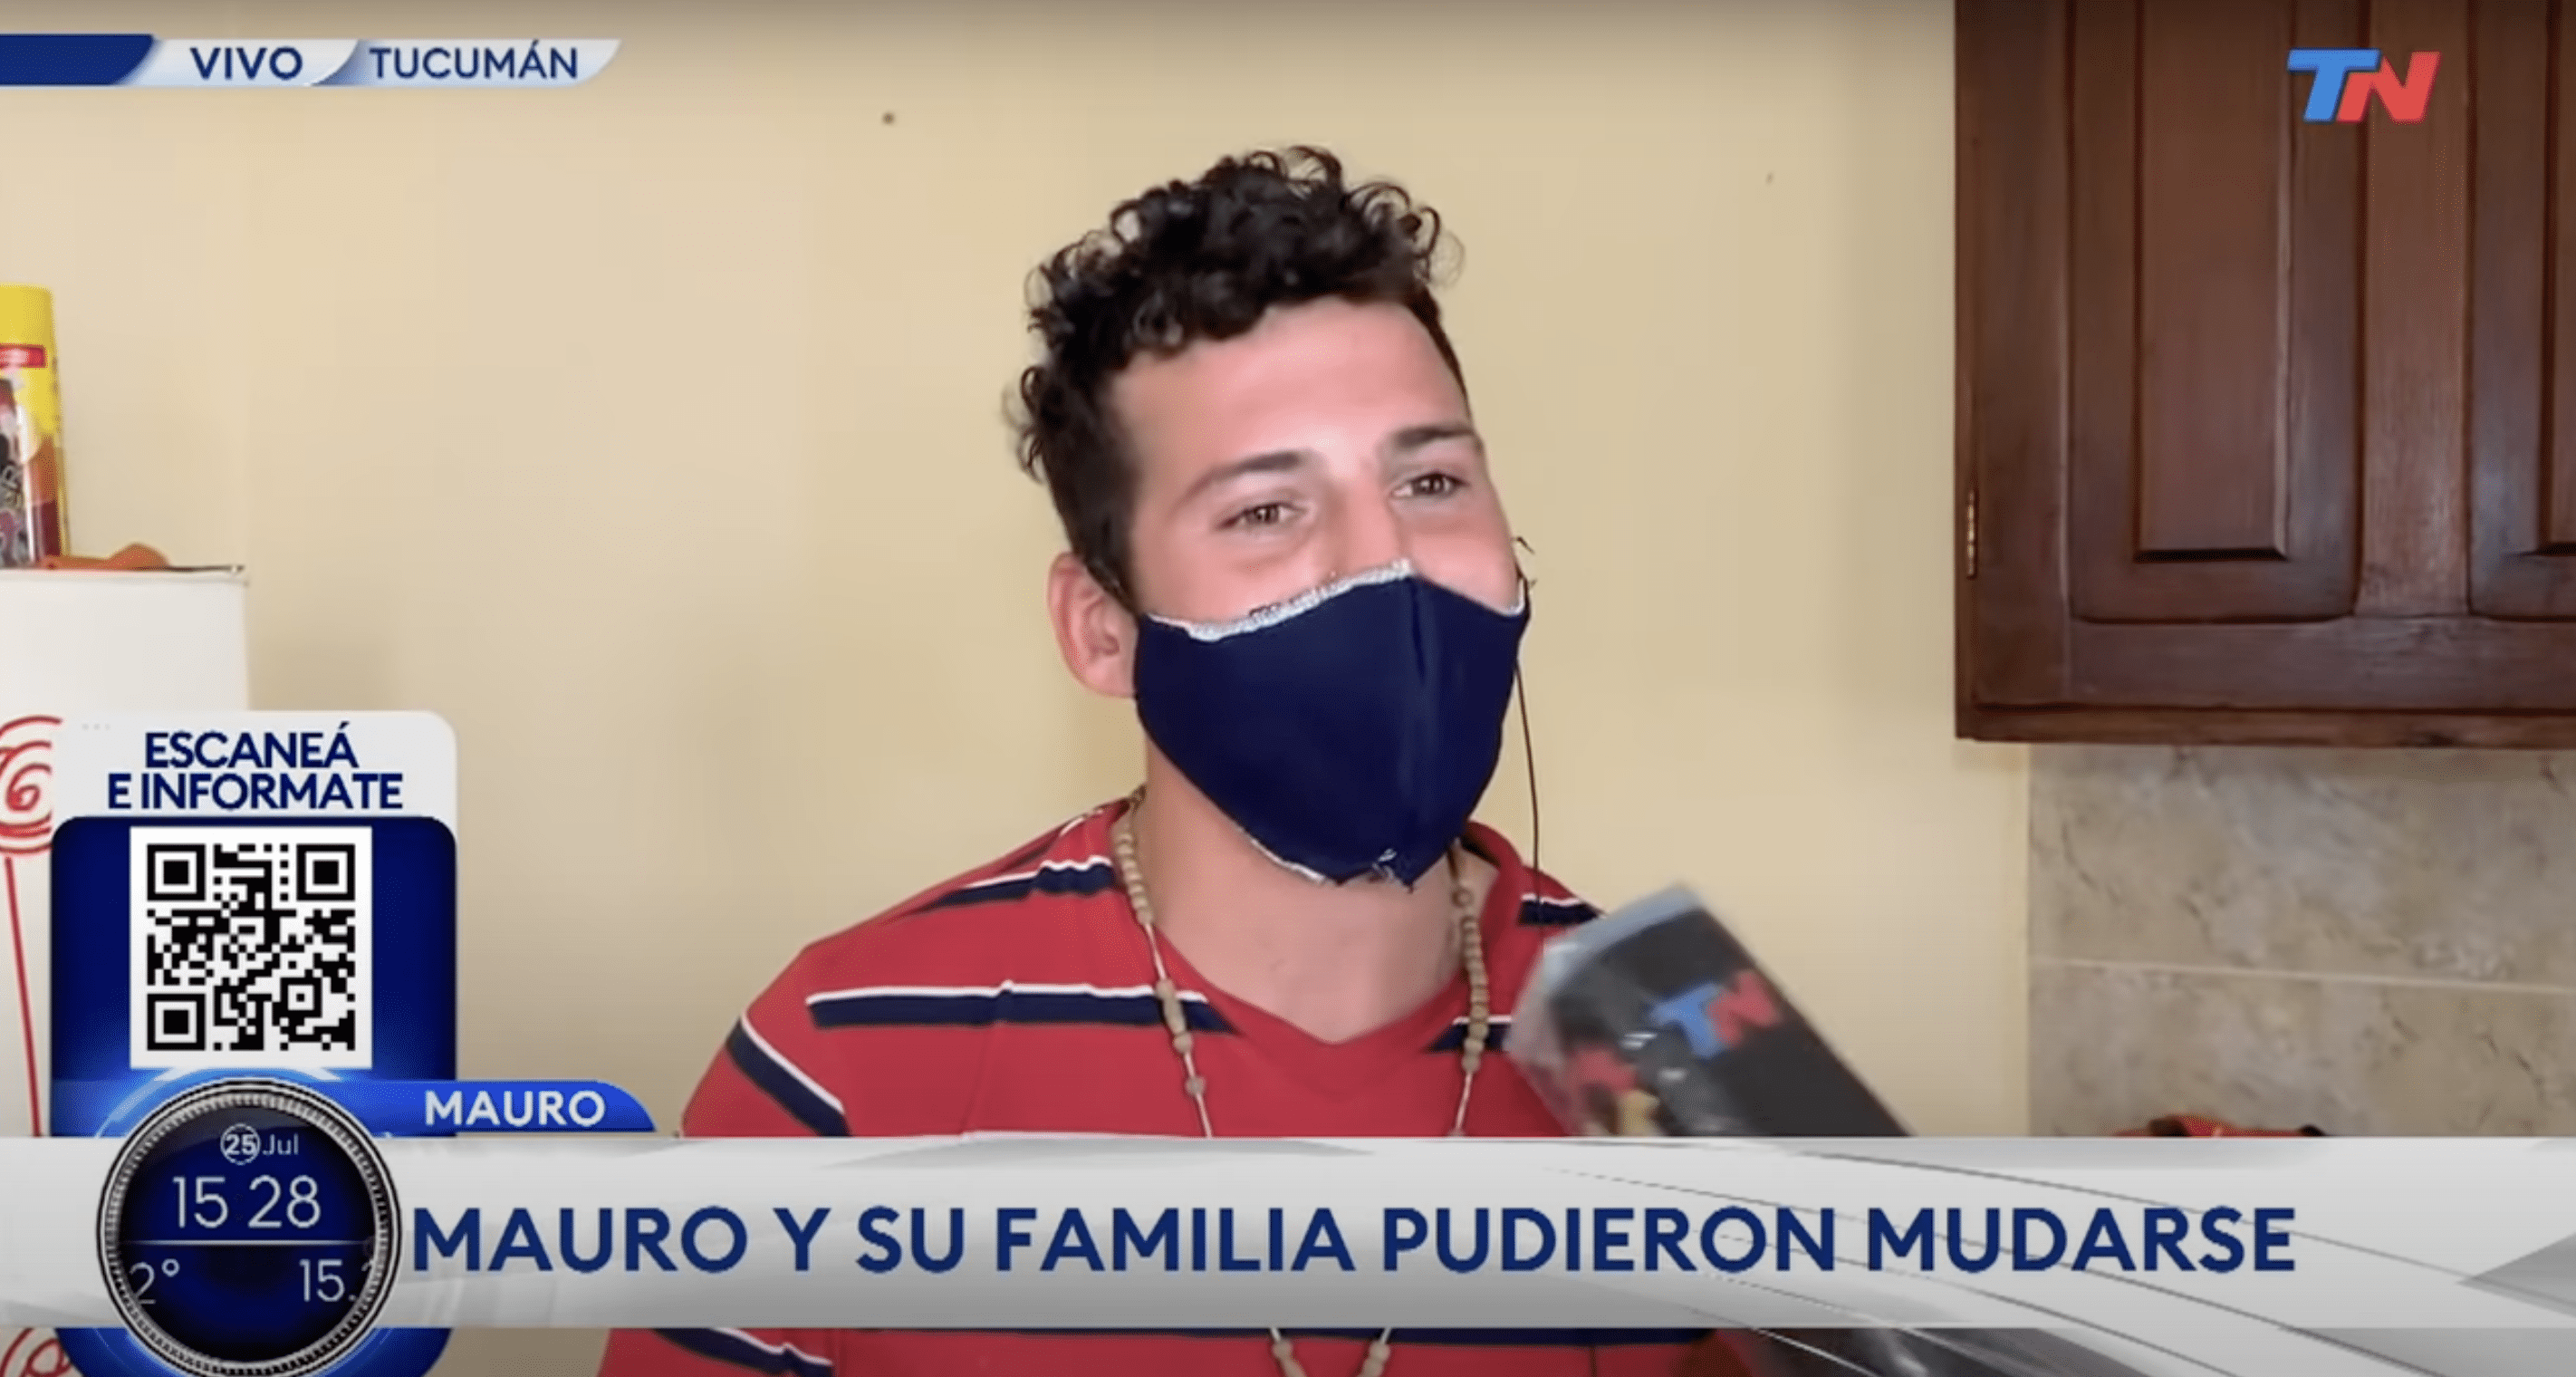 Le jeune père argentin, Mauro | Source : YouTube.com/Todo Noticias